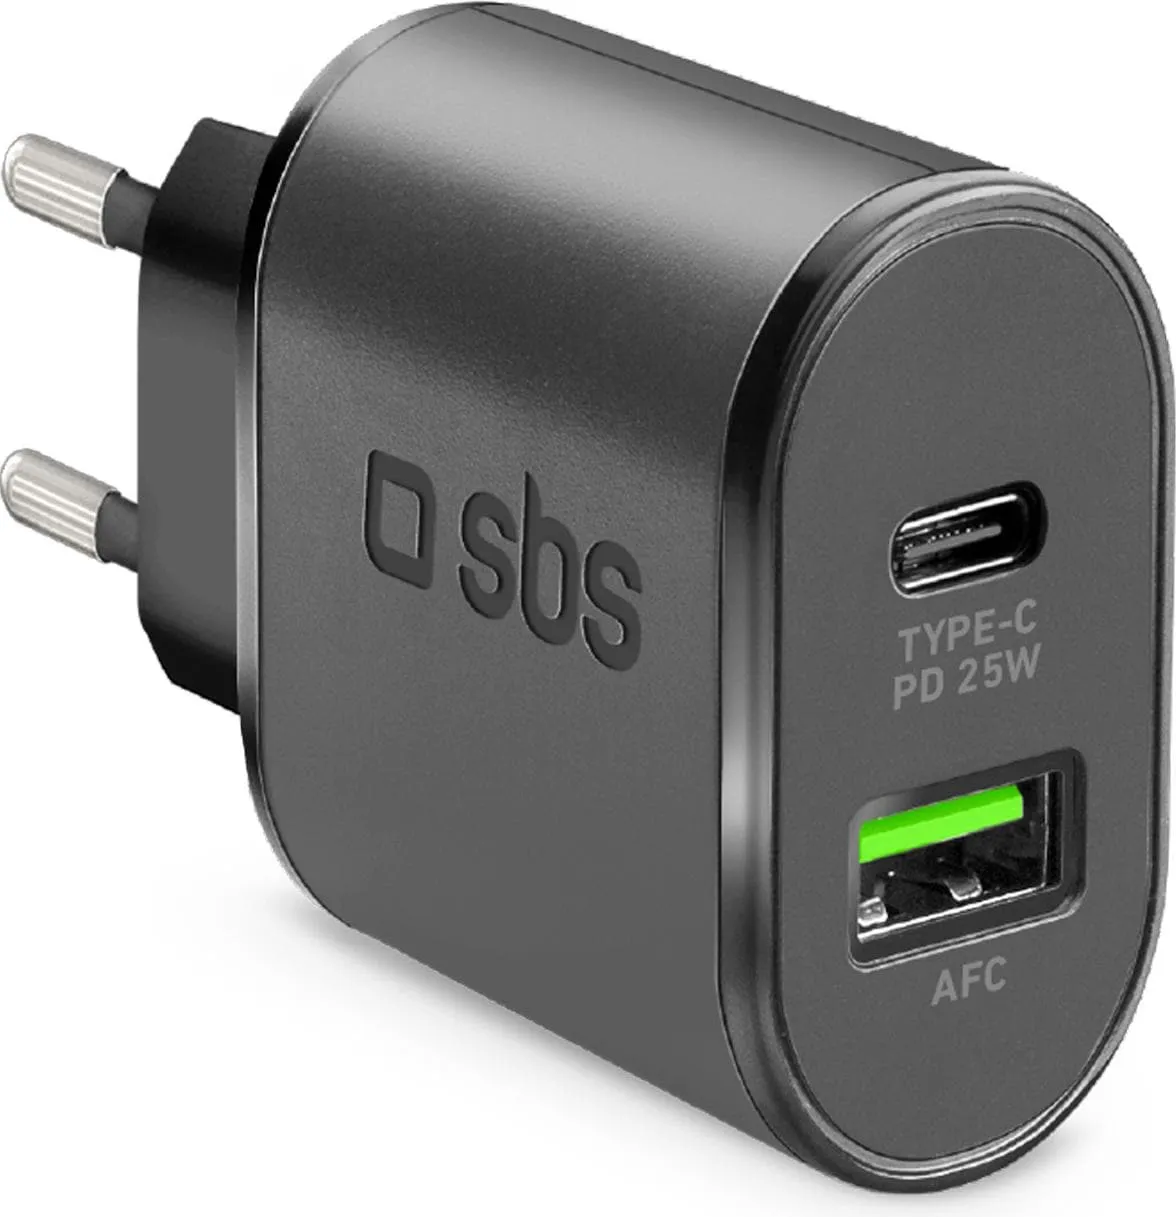 SBS Power-Delivery-25-W-Ladegerät (25 W, Power Delivery), USB Ladegerät, Schwarz